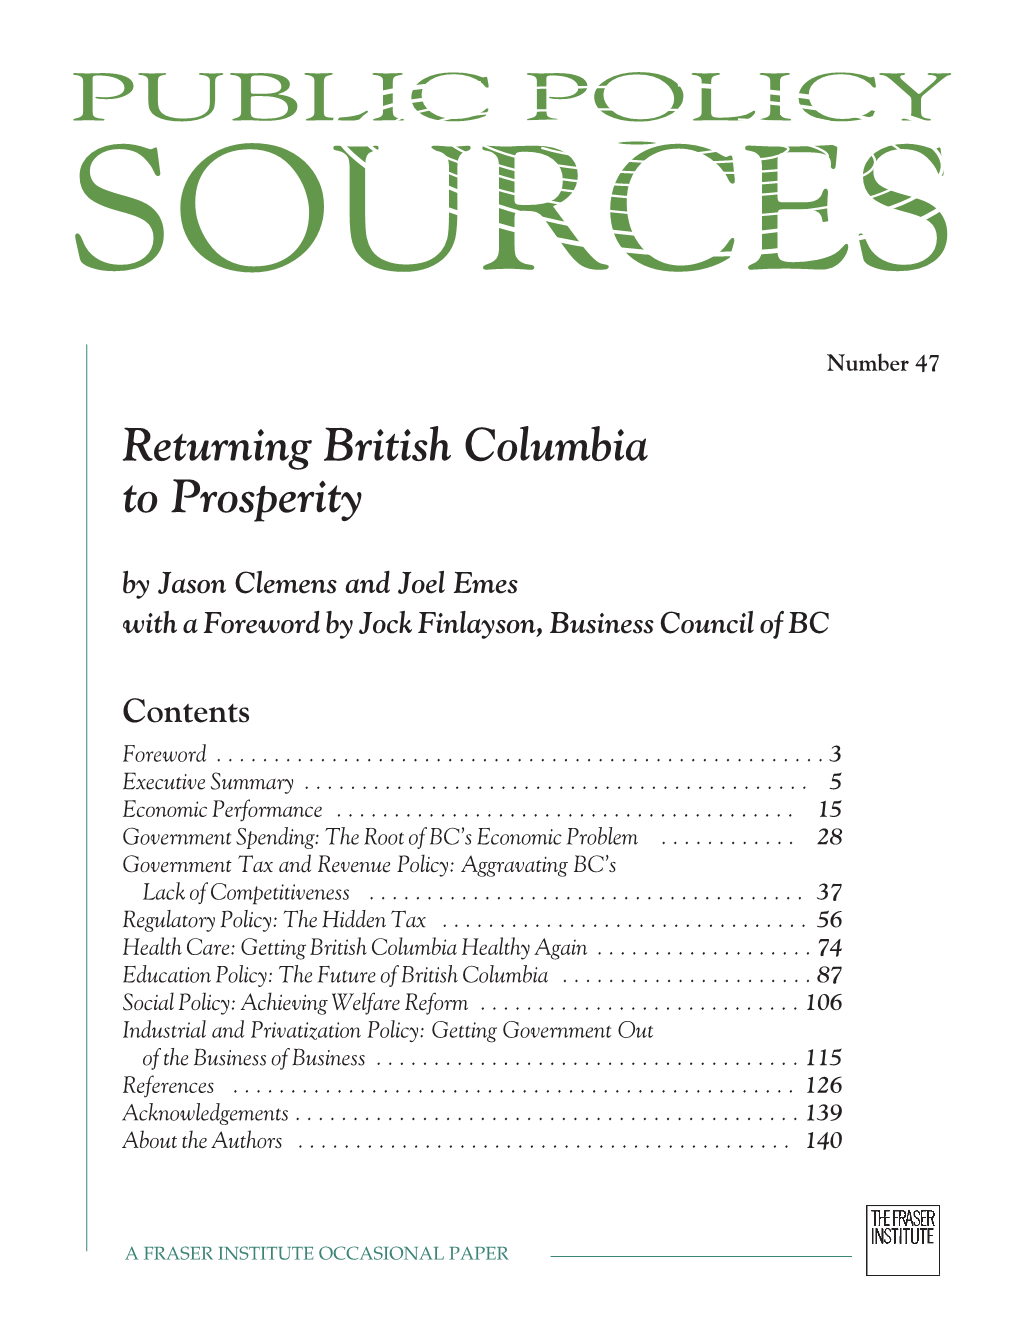 Returning British Columbia to Prosperity